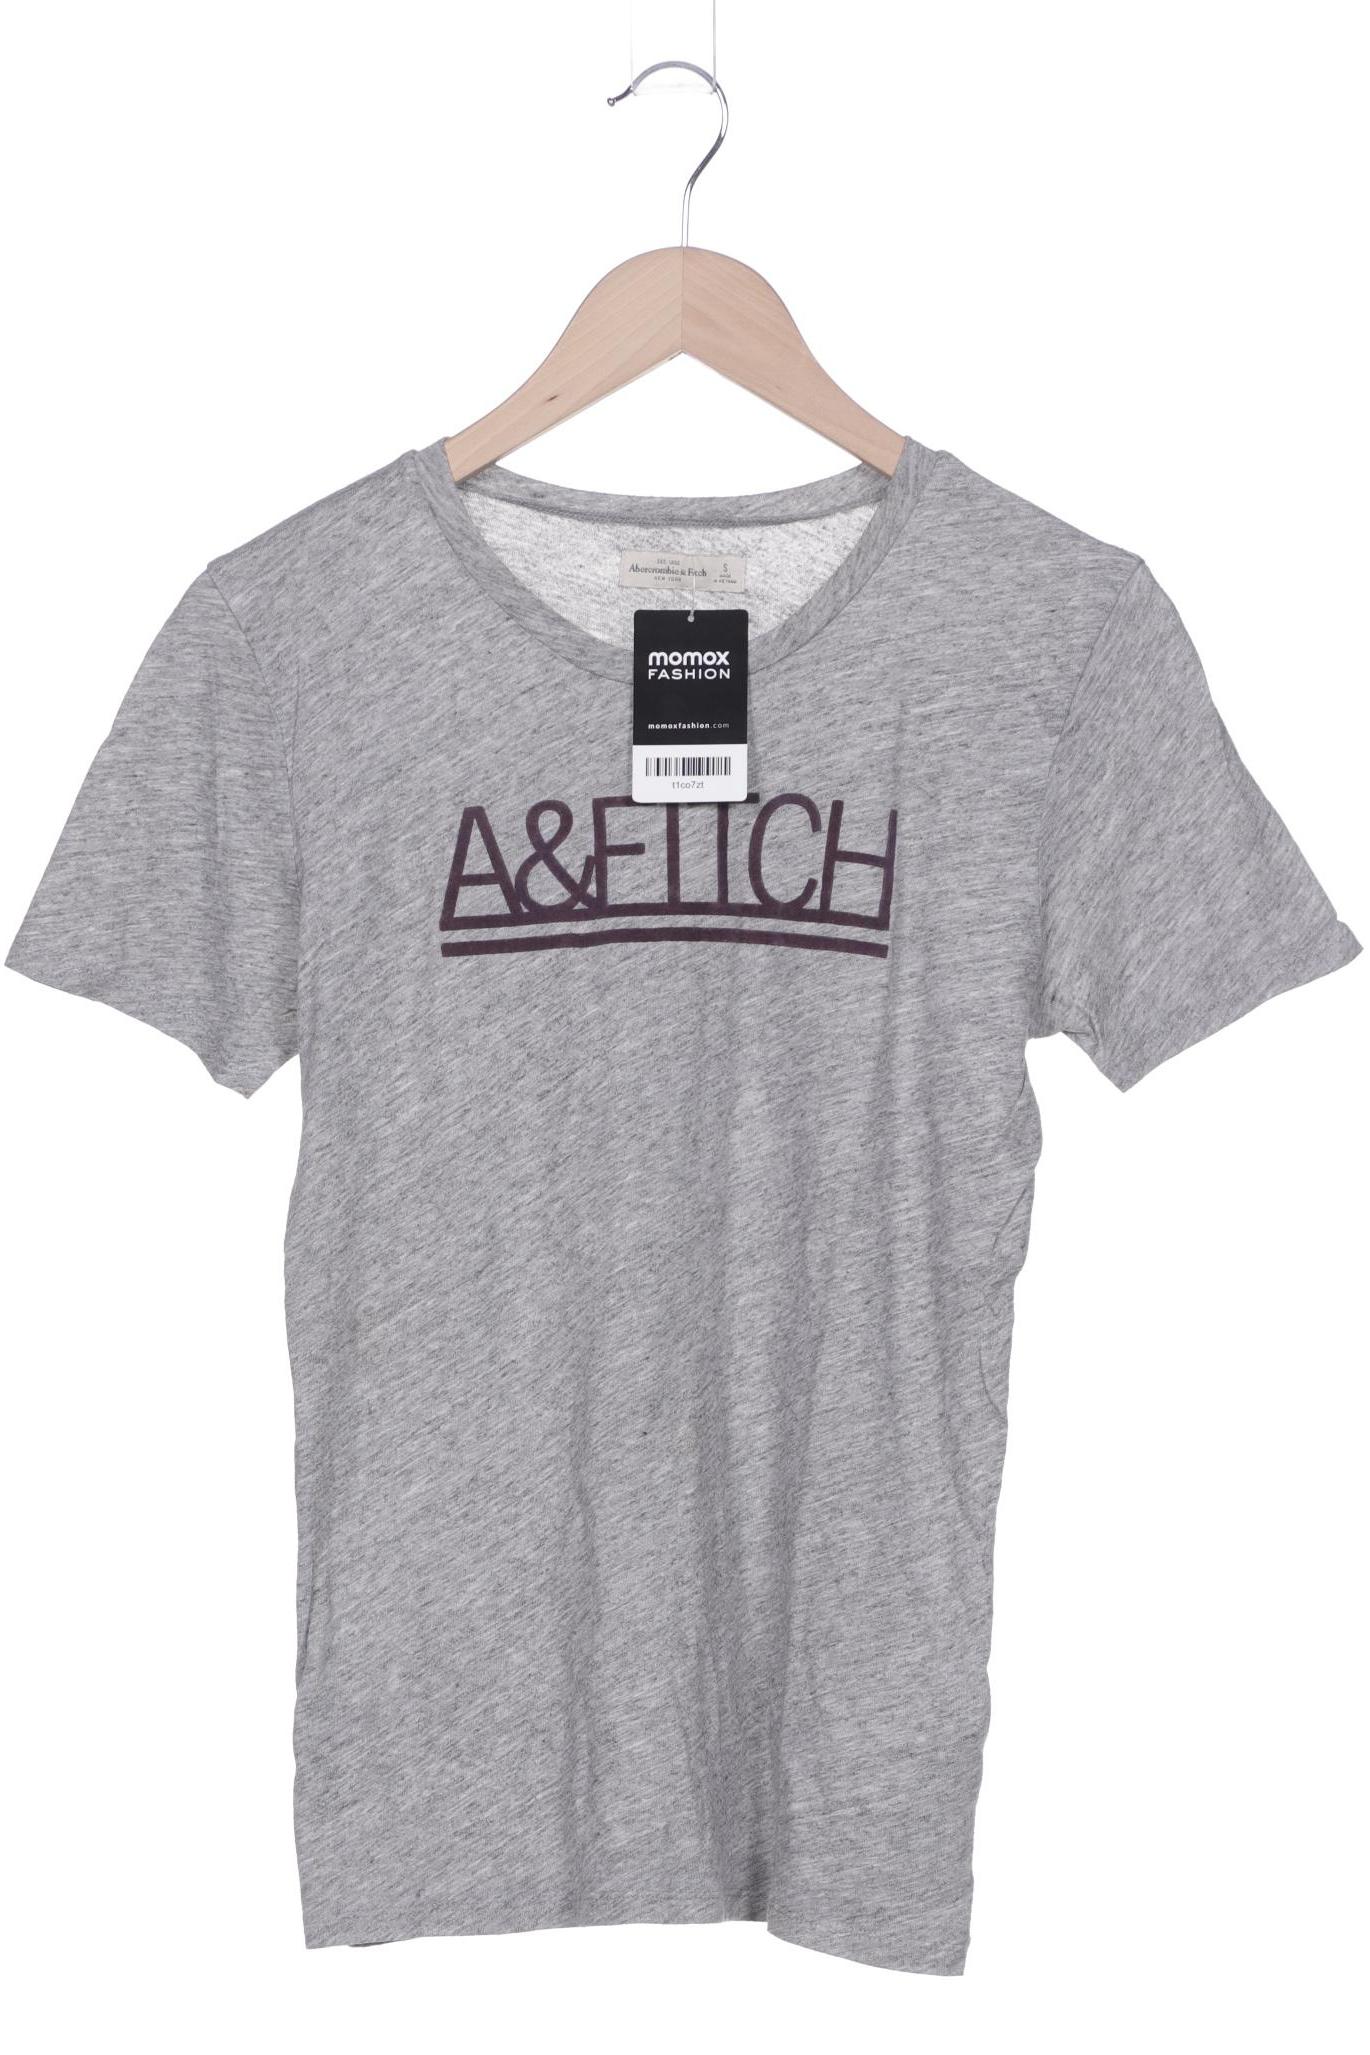 Abercrombie & Fitch Damen T-Shirt, grau, Gr. 36 von Abercrombie & Fitch